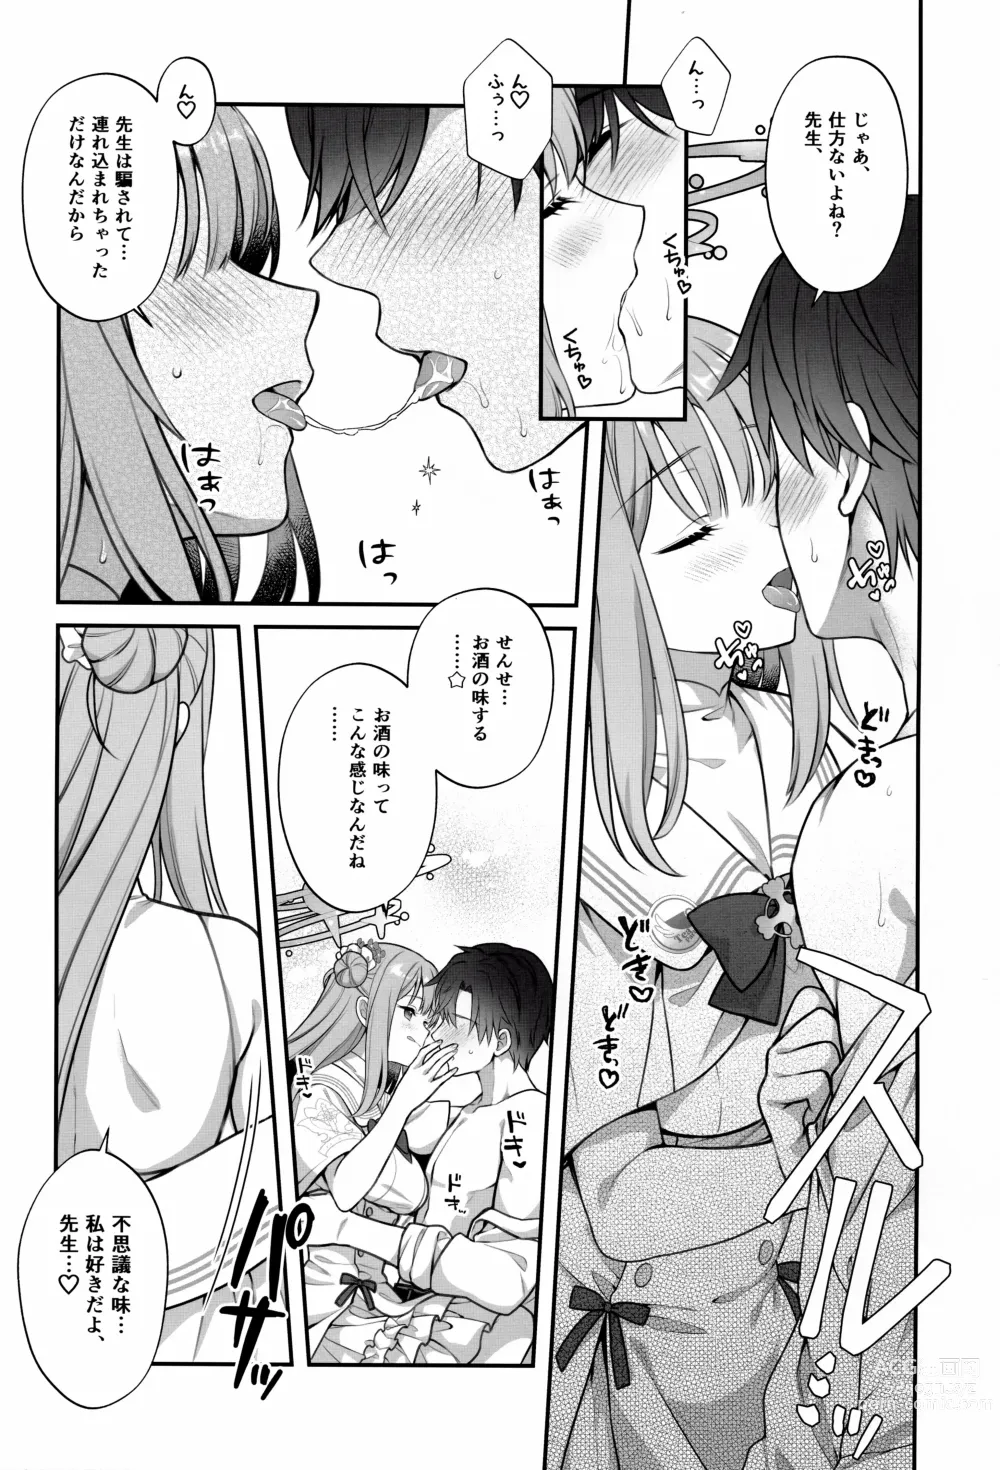 Page 6 of doujinshi Mika to Himitsu no Teatime